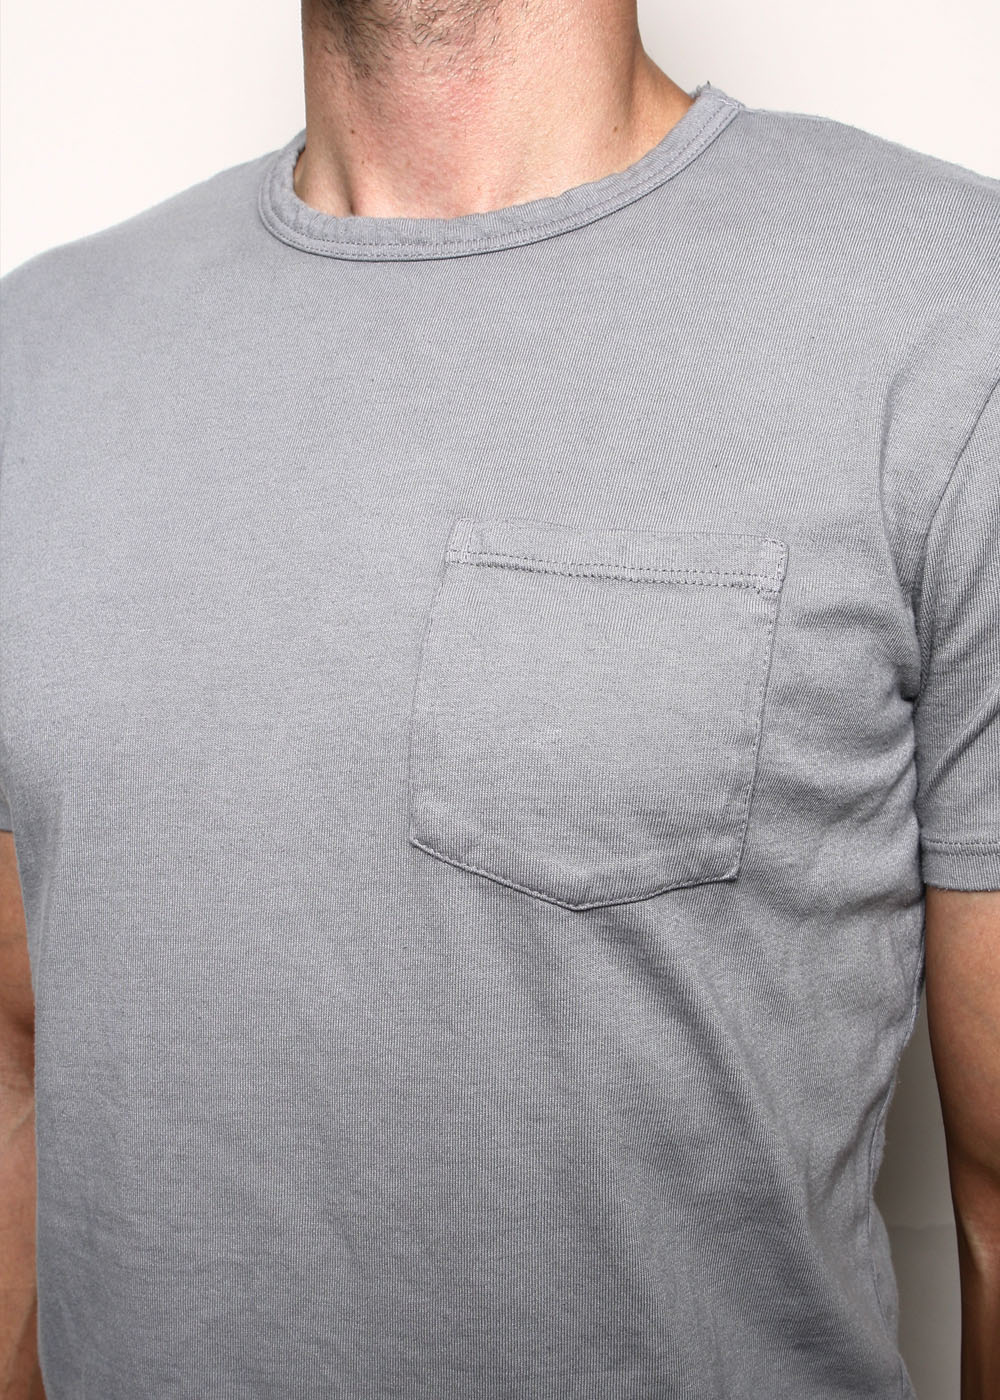 Pocket T-Shirt // Faded Grey